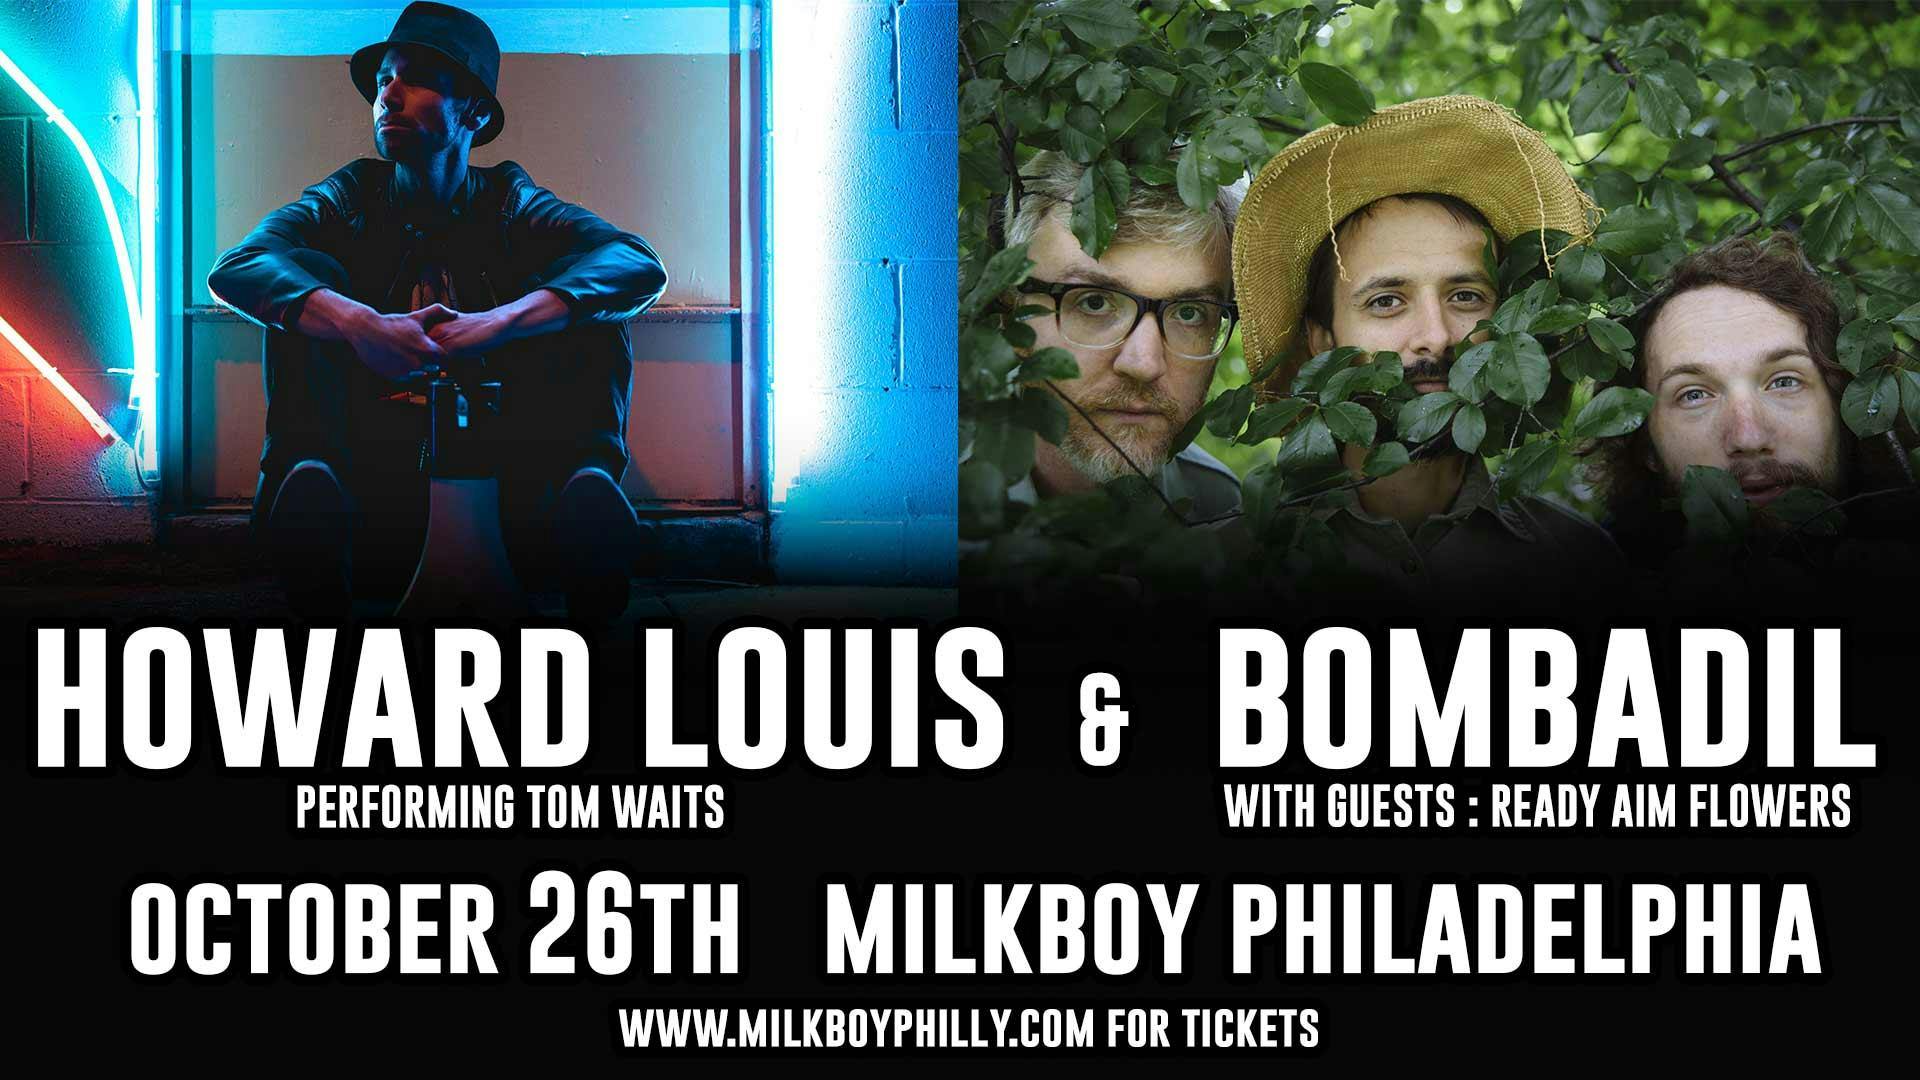 Howard Louis Performs Tom Waits + Bombadil